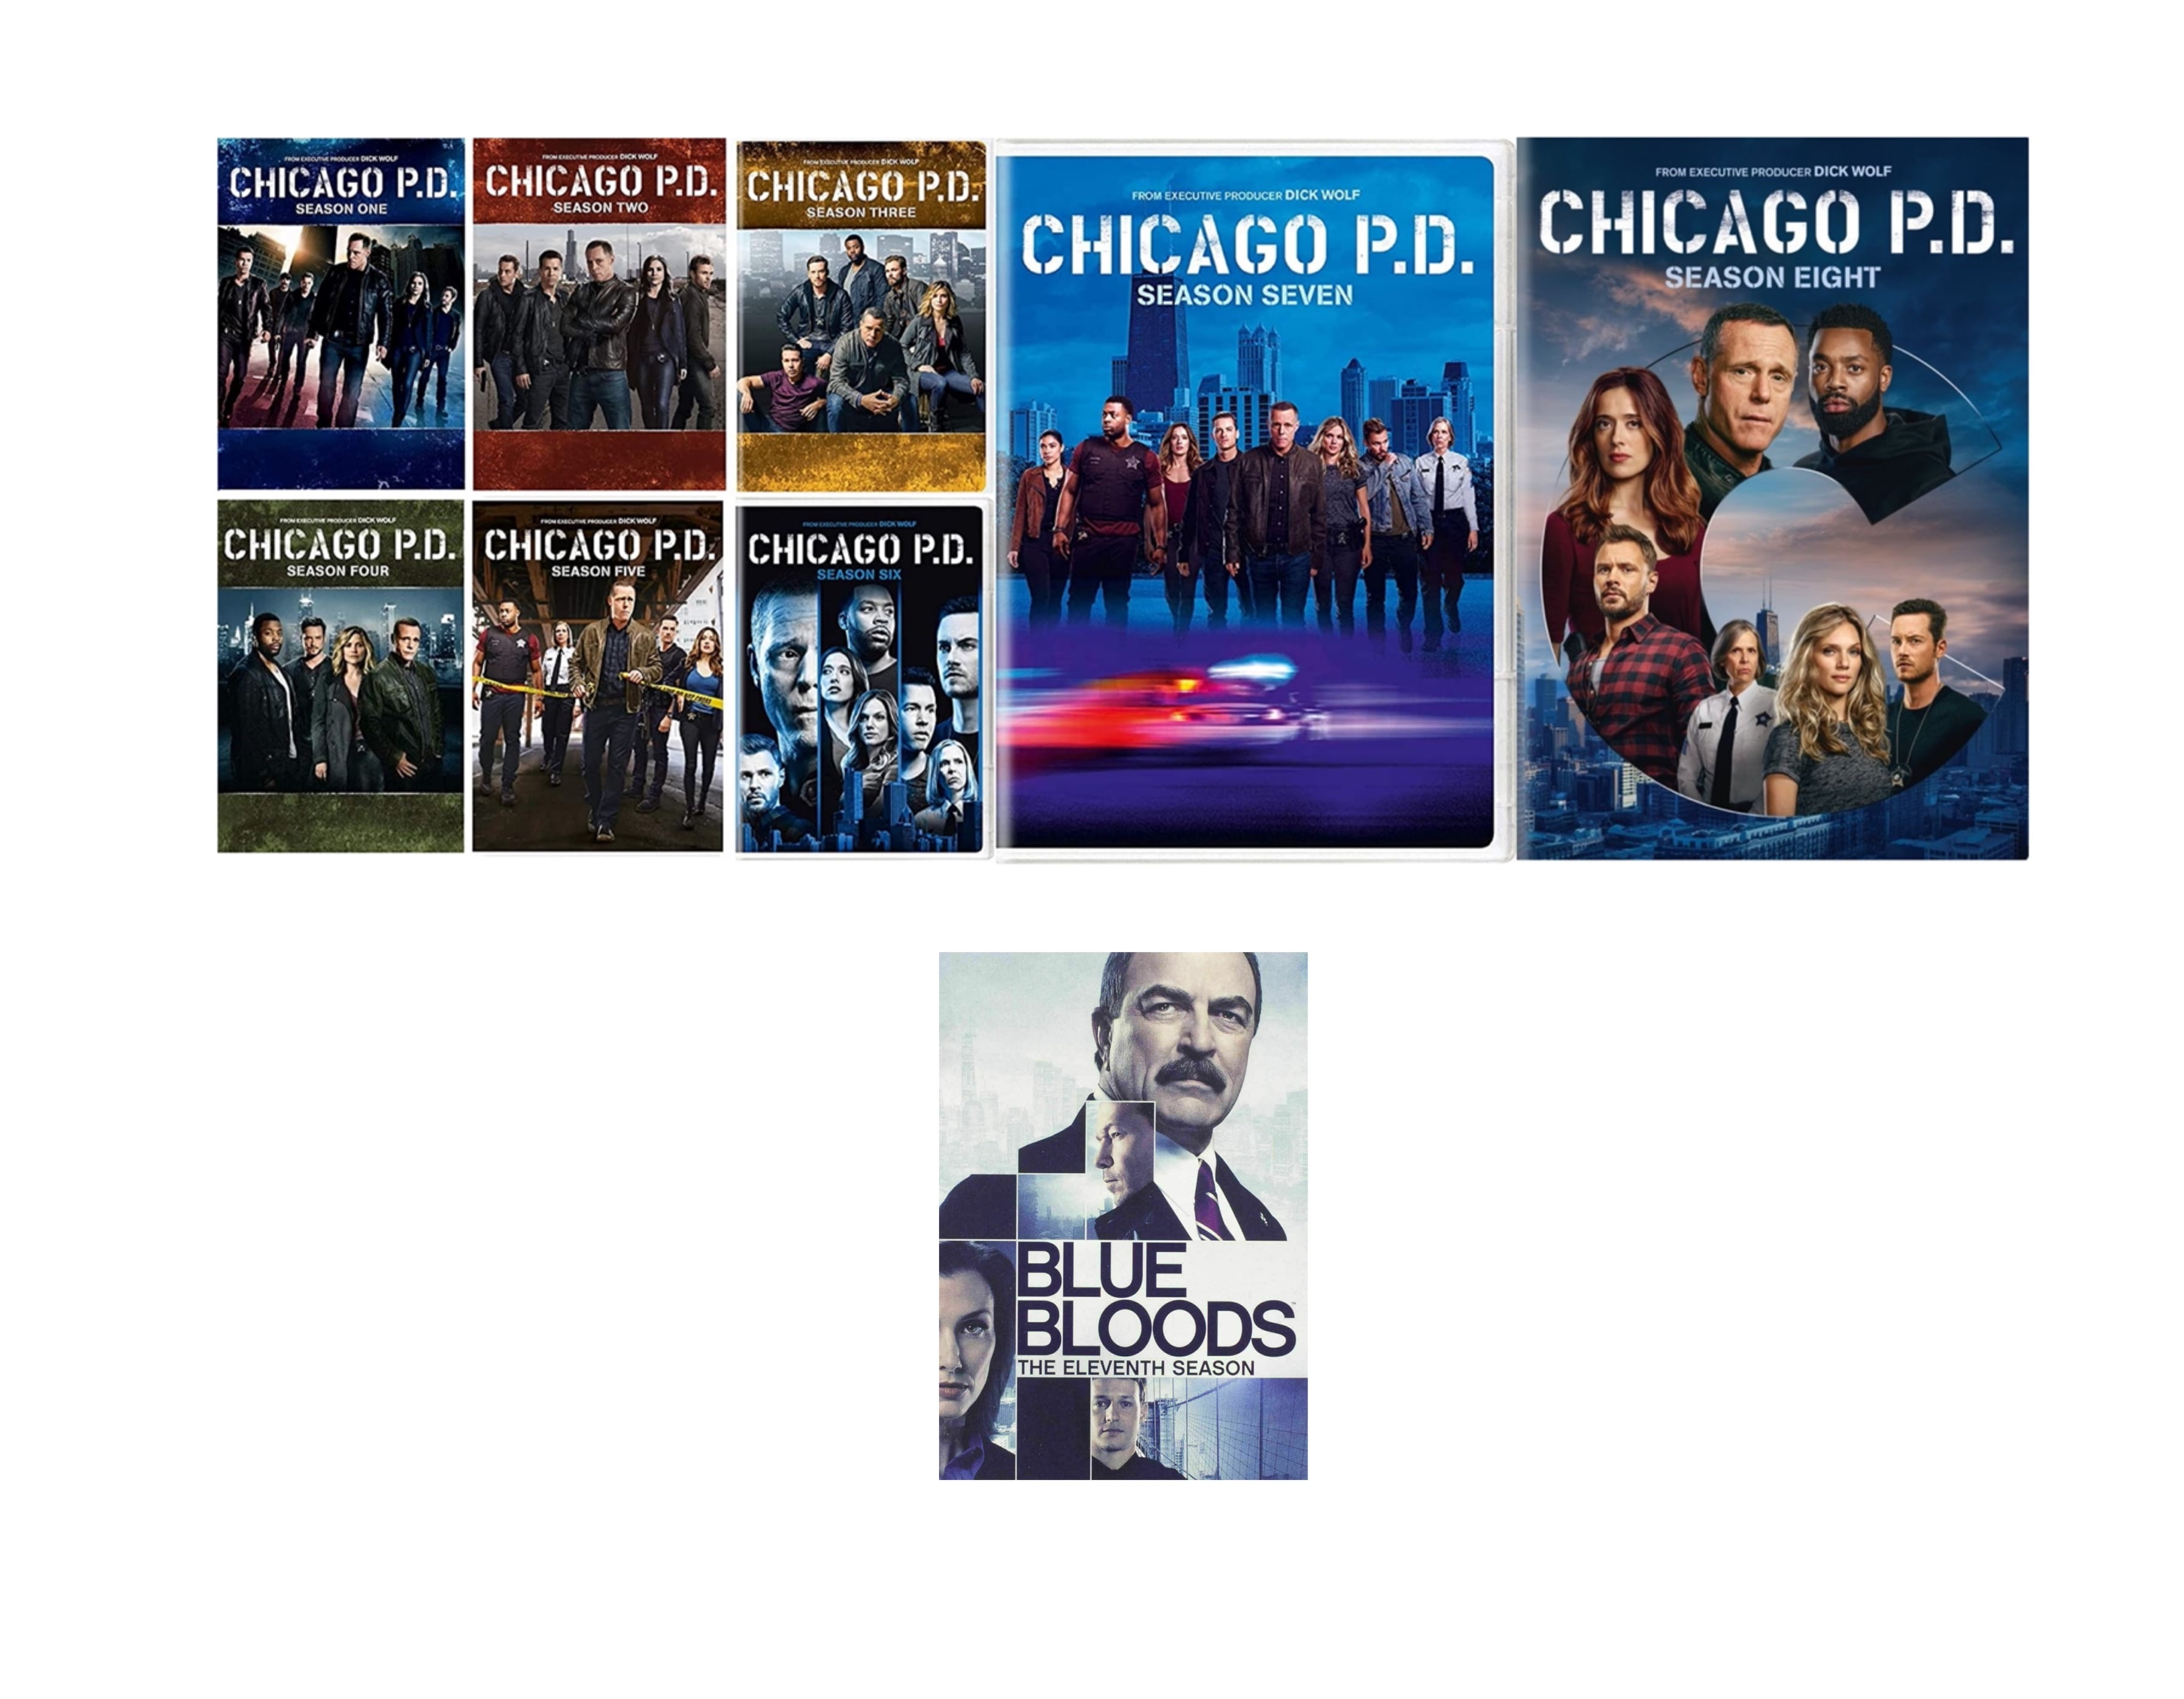 Campo Injusto espada Chicago PD: The Complete Series Seasons 1-8 DVD+ Free Bonus Blue Bloods  season 11 DVD - Walmart.com